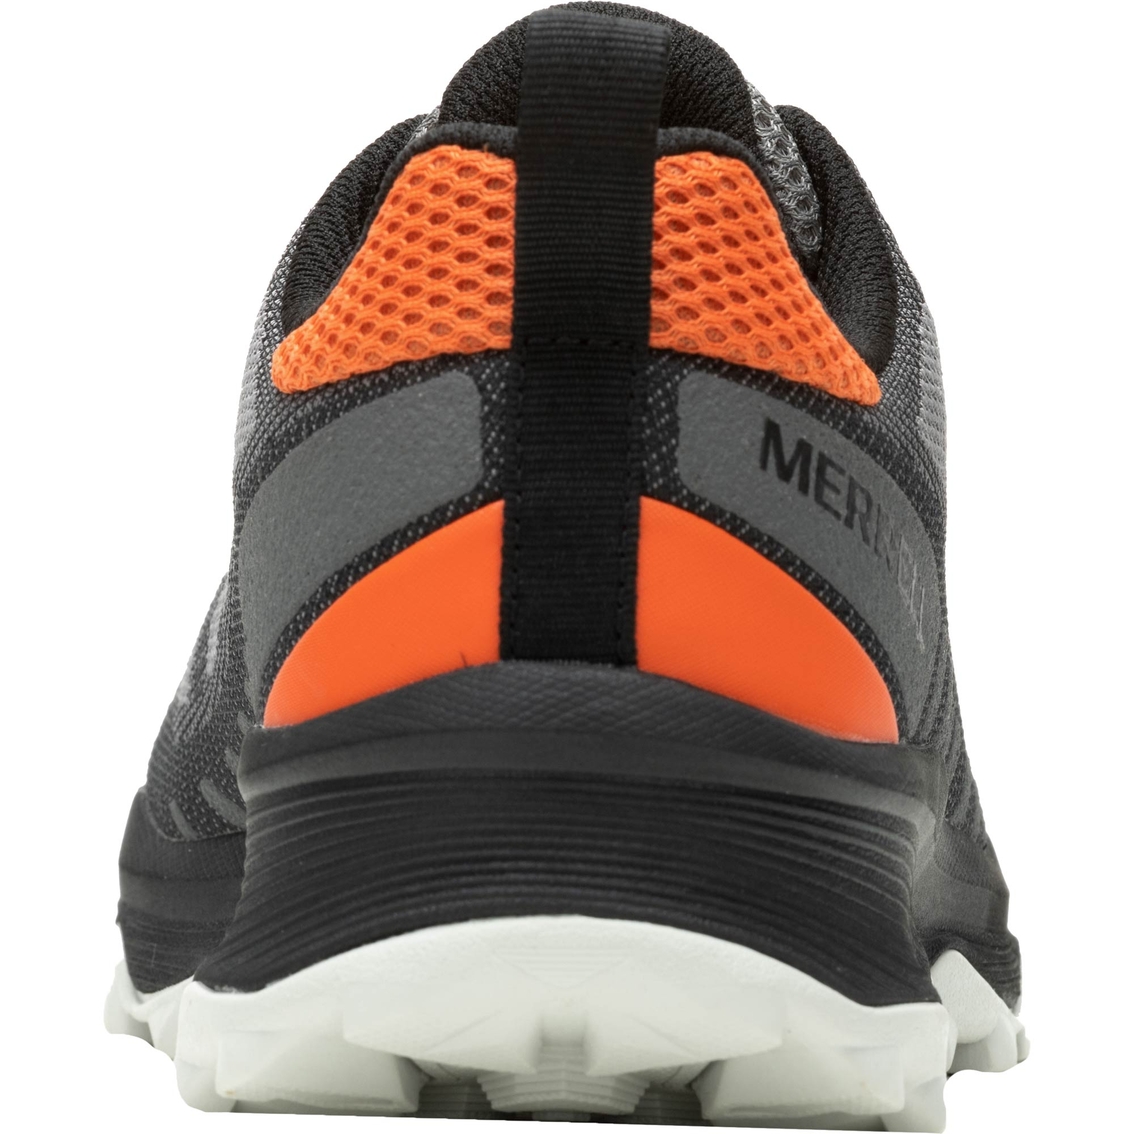 Merrell Men's Speed Eco Sneakers, Charcoal - Image 4 of 6